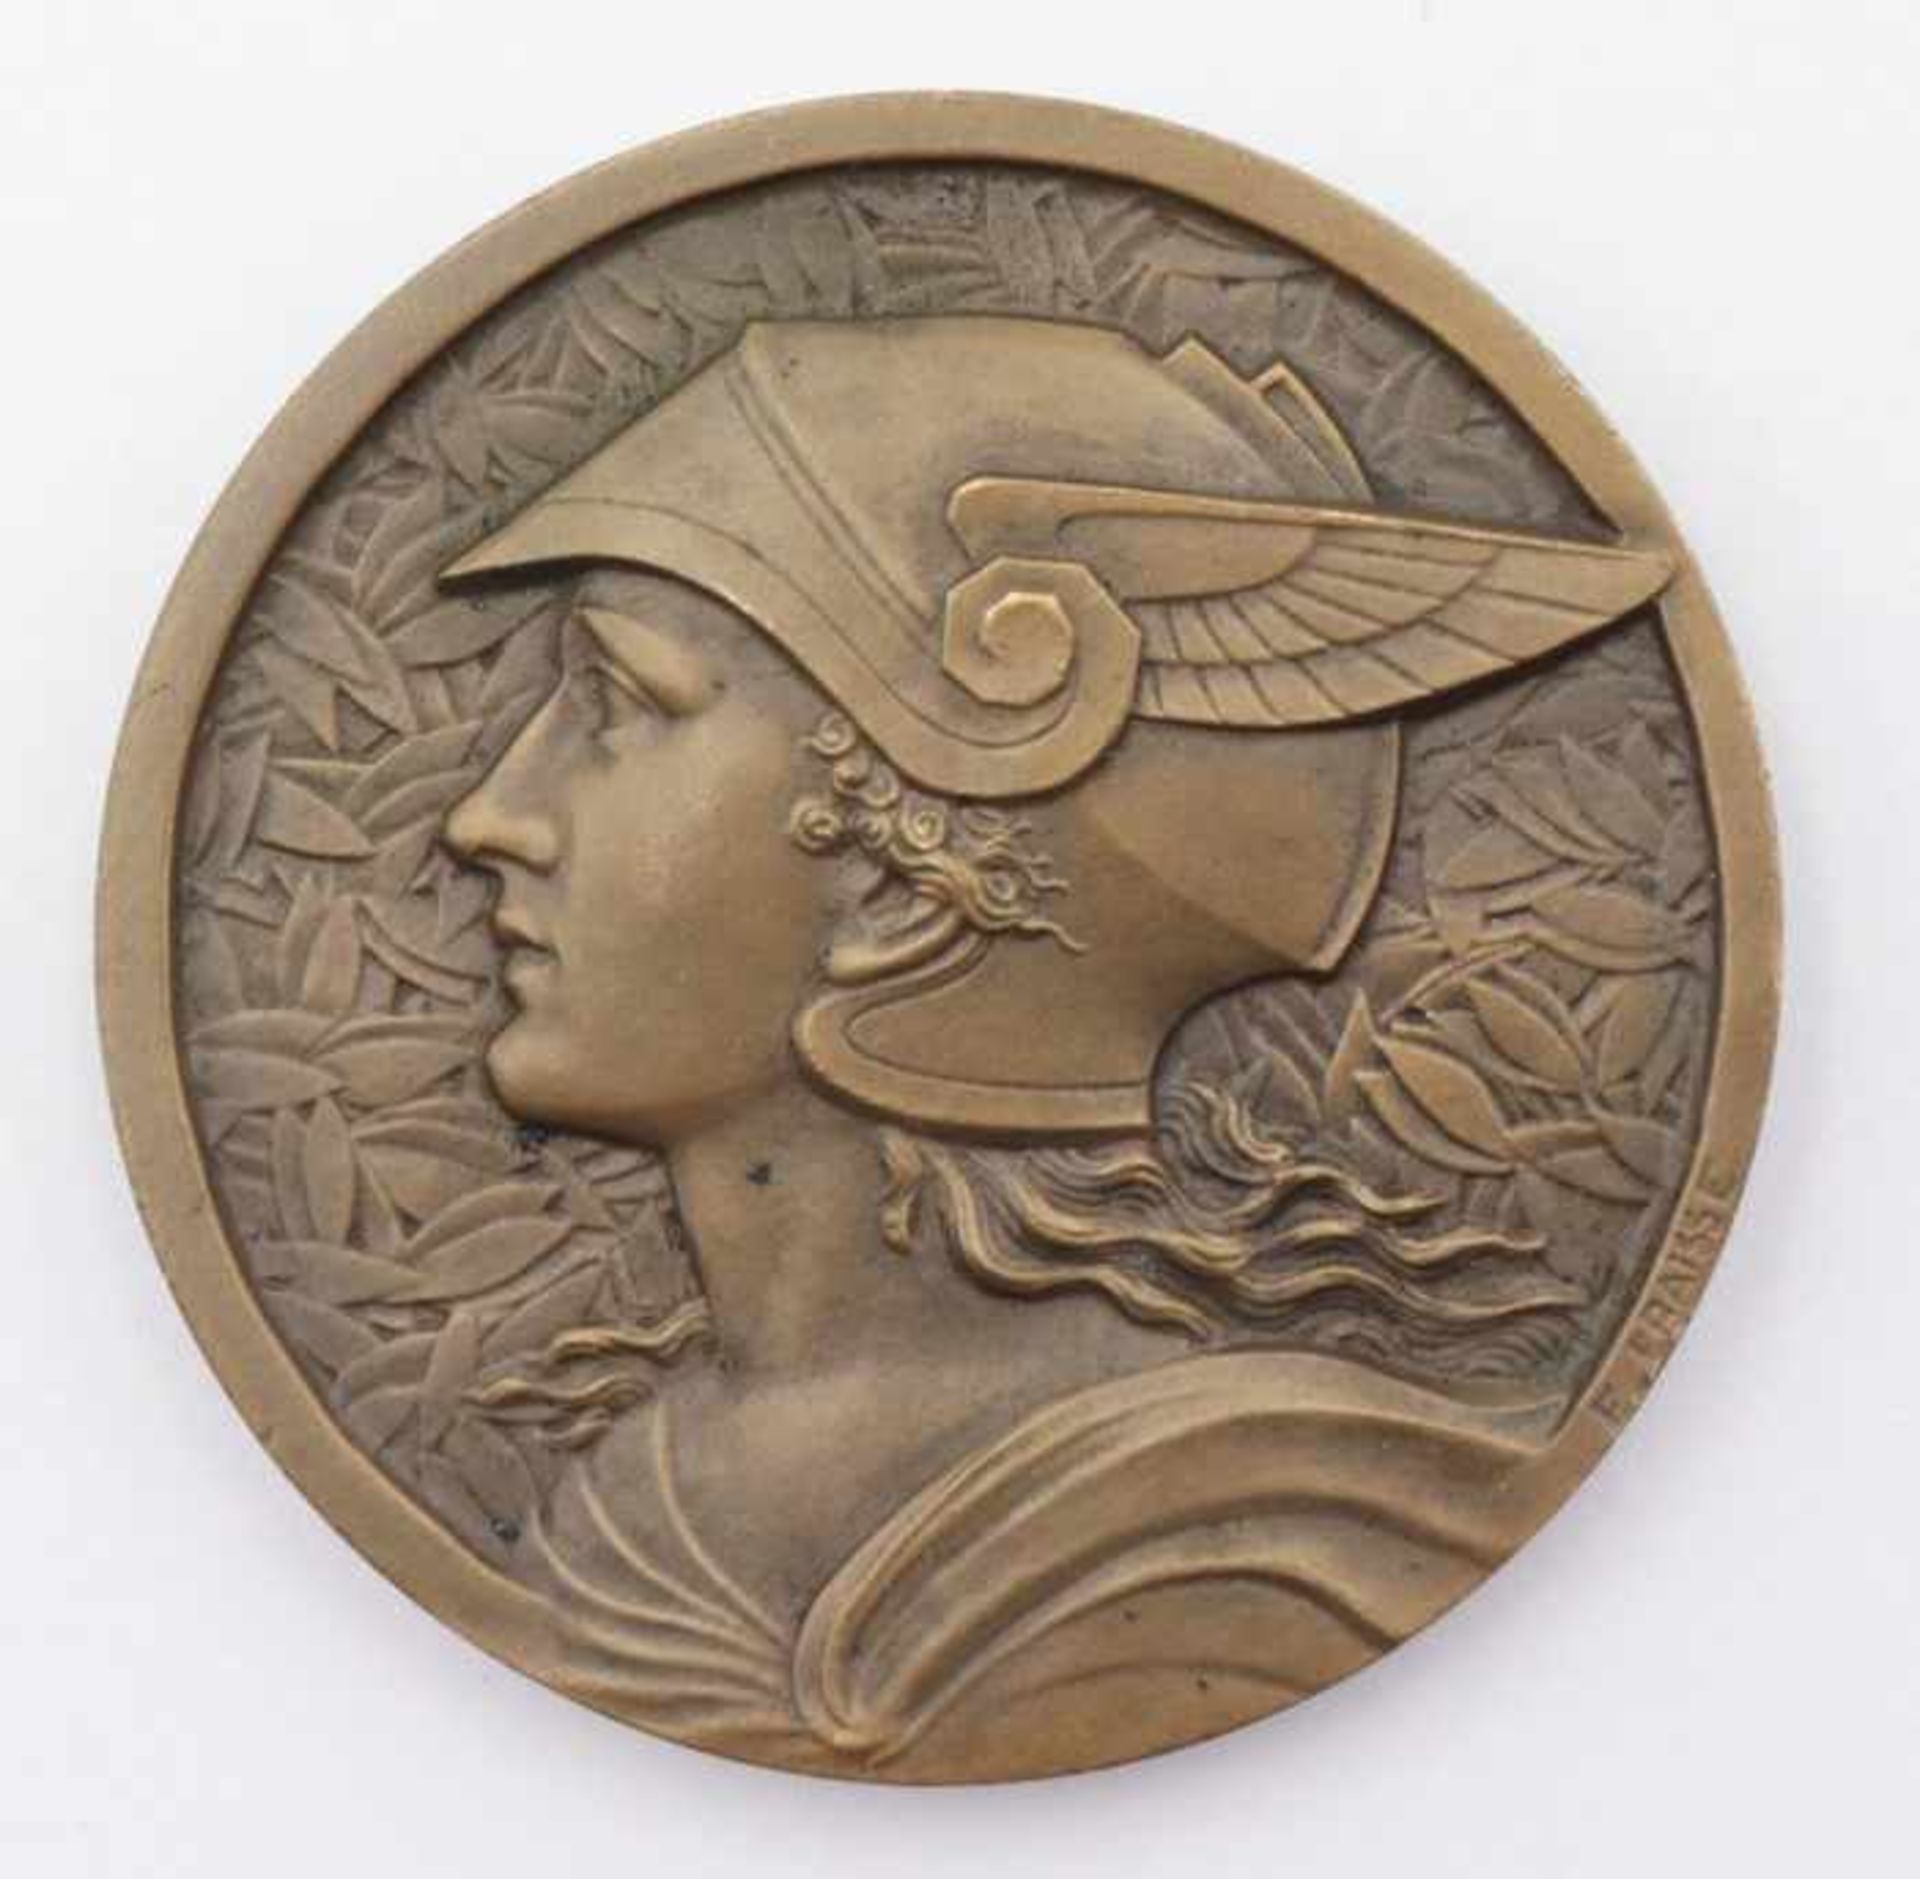 Medaille FrankreichHermes, rs. Siegeskranz, Metall, o.J., G 68 g, D 5 cm, vz- - -20.00 % buyer's